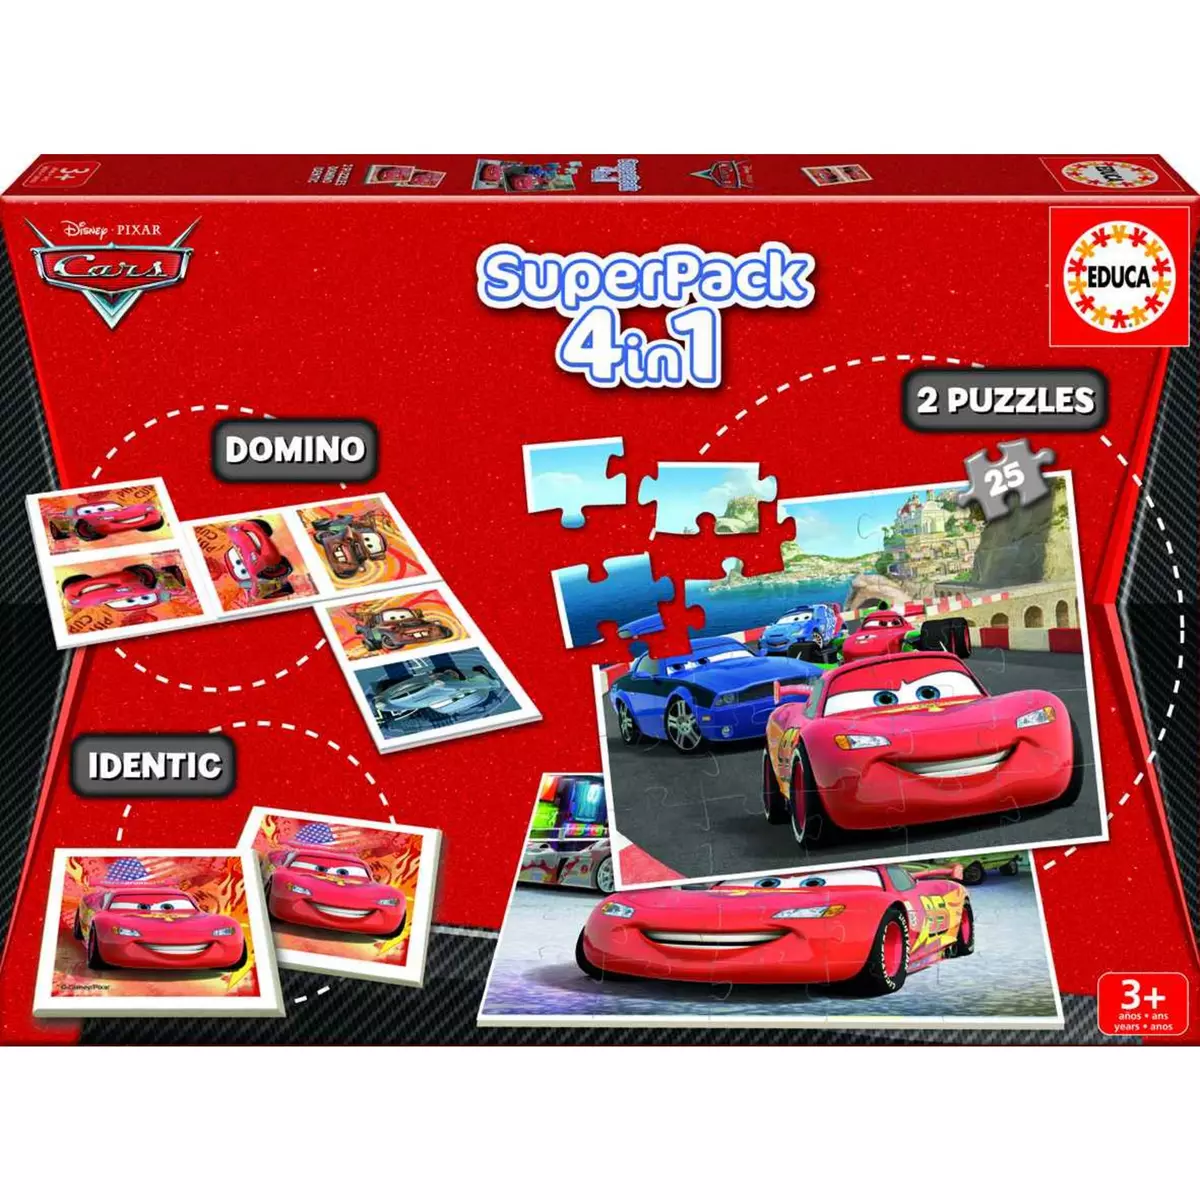 EDUCA SuperPack 4 jeux en 1 - Disney Cars